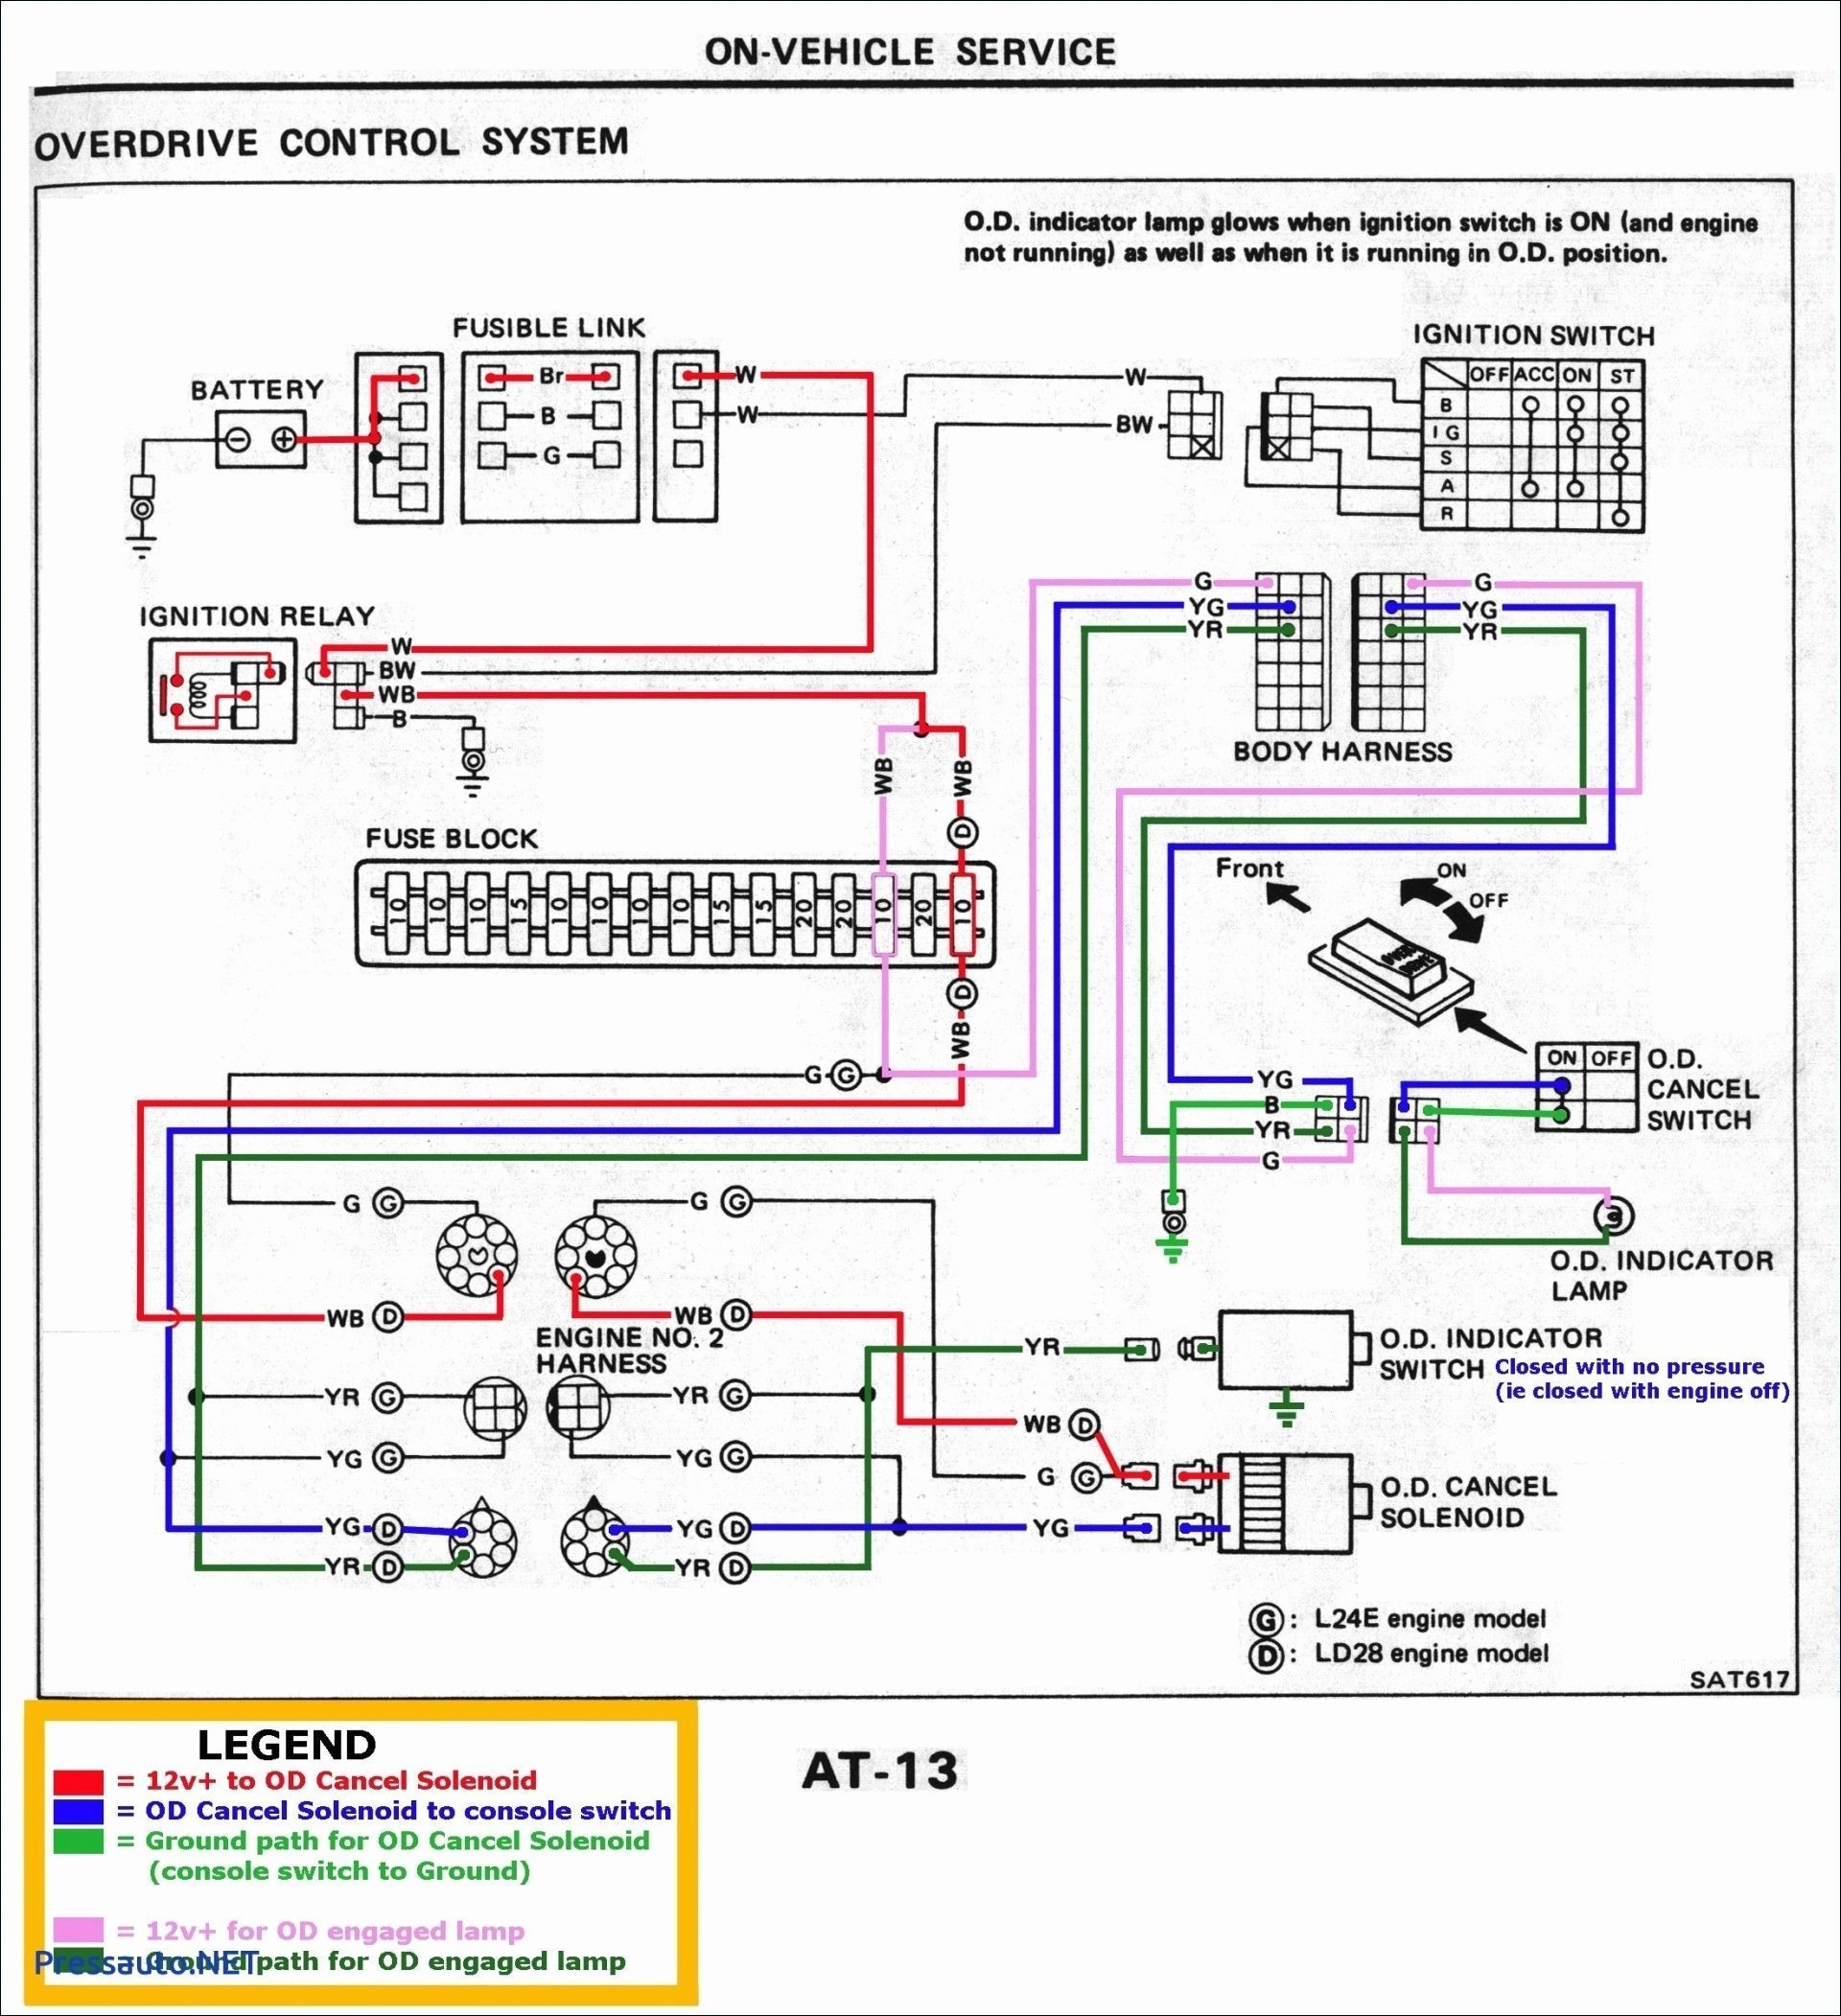 General Electric Motor Wiring Diagram Wiring Diagram for Ge Dryer Motor Save Hotpoint Dryer Timer Wiring Of General Electric Motor Wiring Diagram